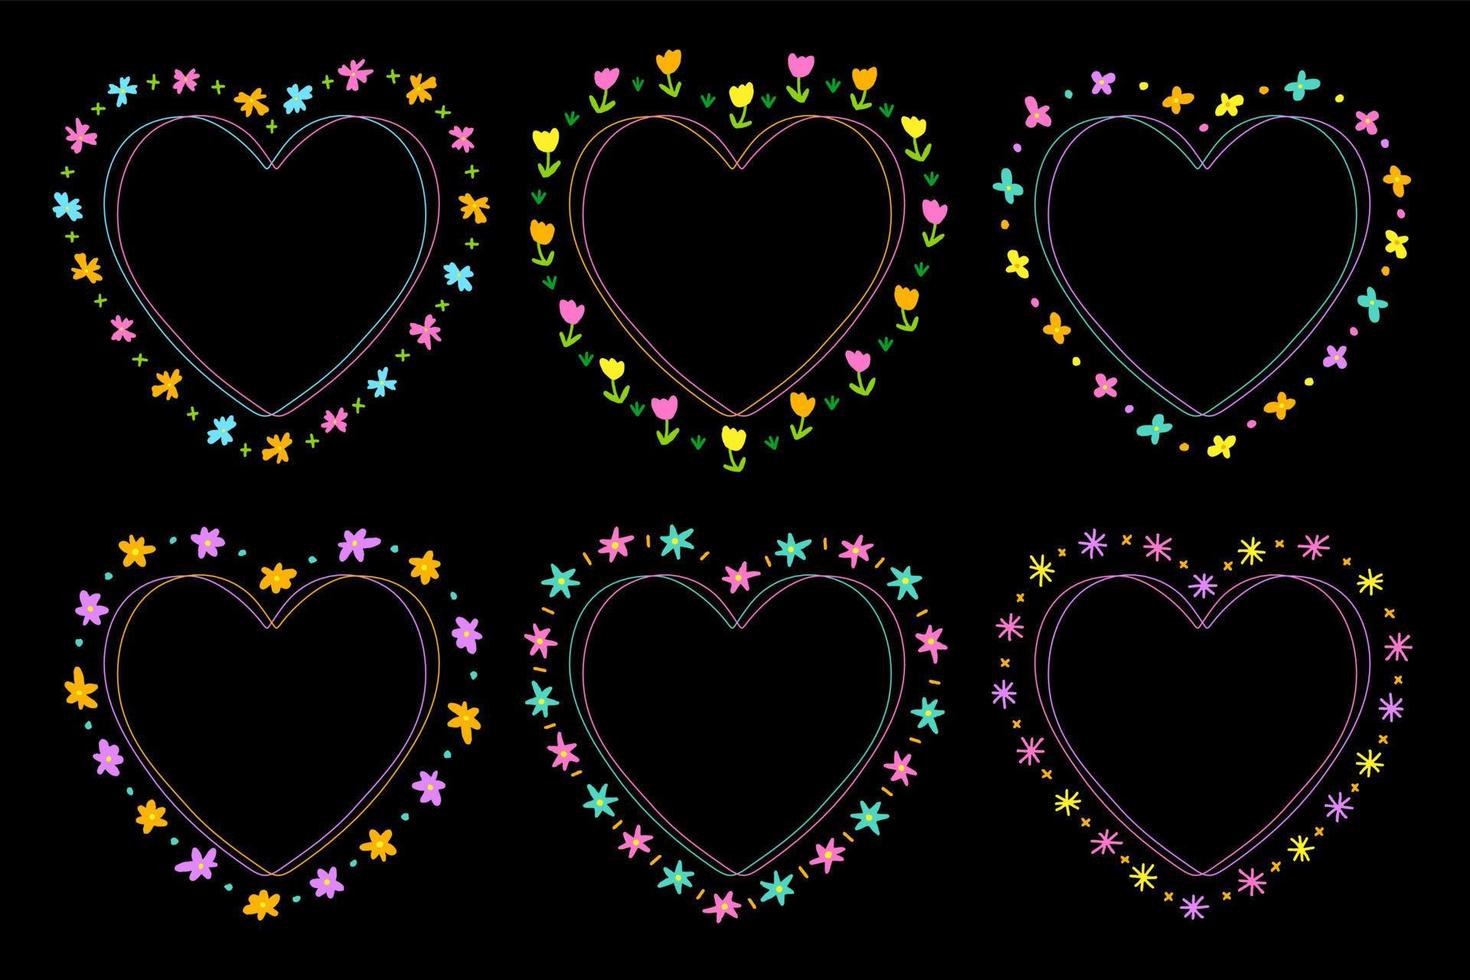 lindo neón abstracto corazón flor forma día de san valentín garabato dibujo a mano alzada línea dibujada bordes marcos corona placa conjunto colección estilo plano arco iris colorido fondo negro vector ilustración